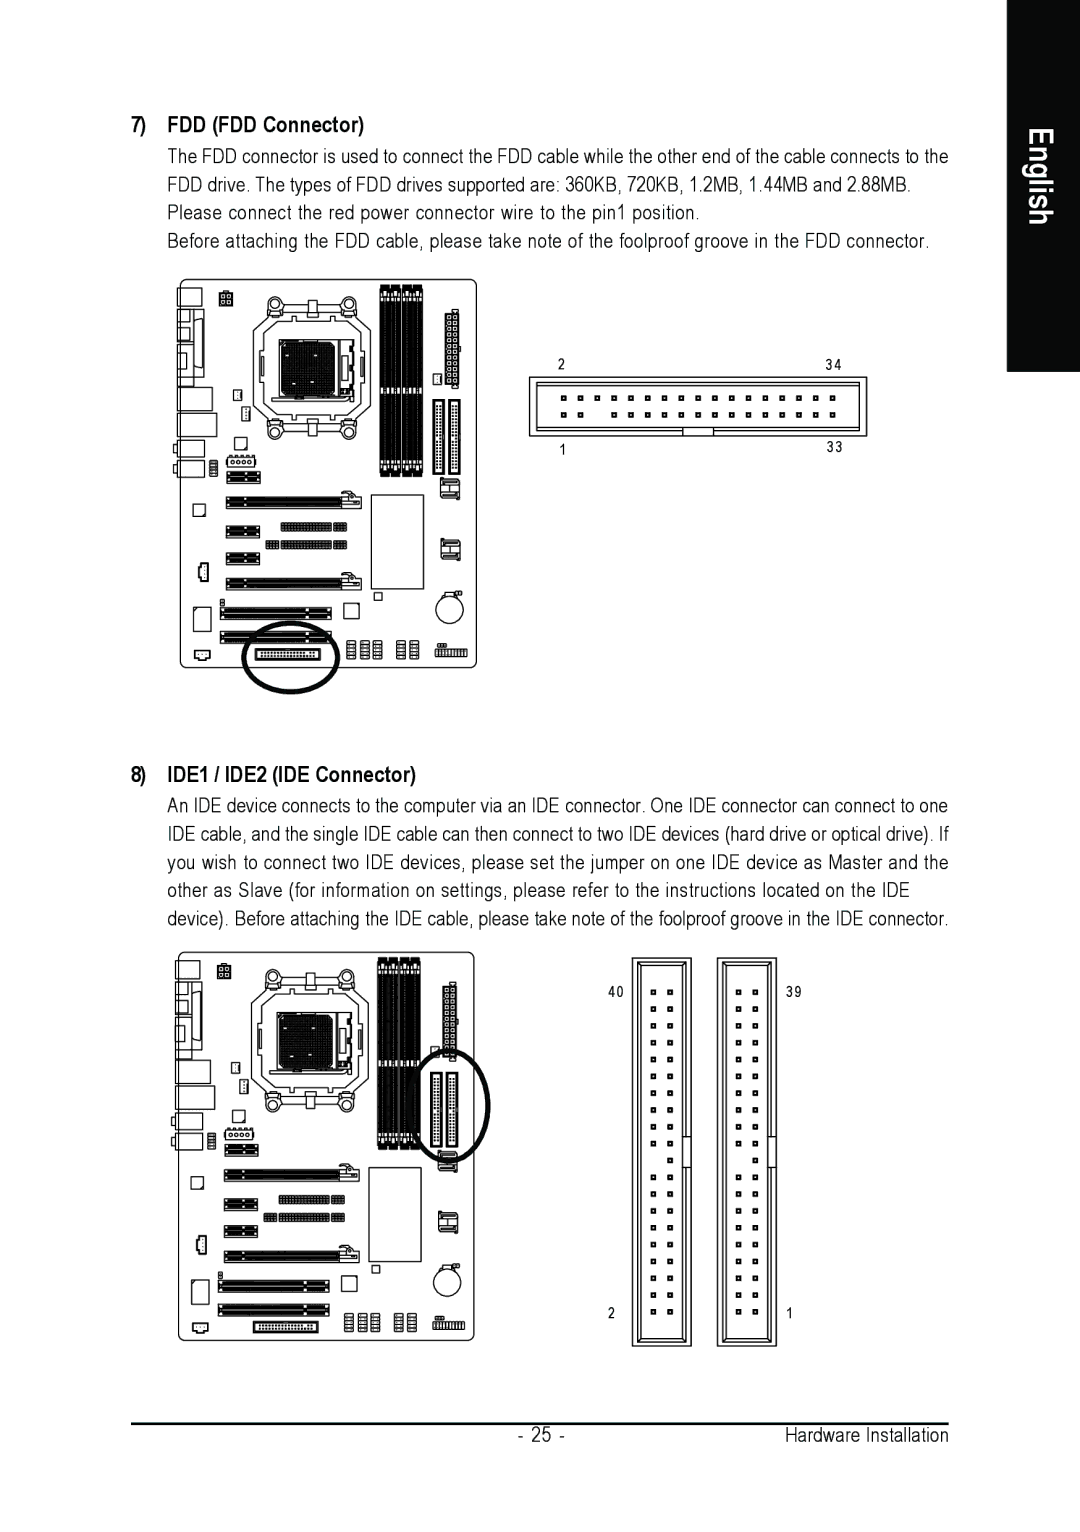 Gigabyte GA-M55SLI-S4 user manual FDD FDD Connector, IDE1 / IDE2 IDE Connector 